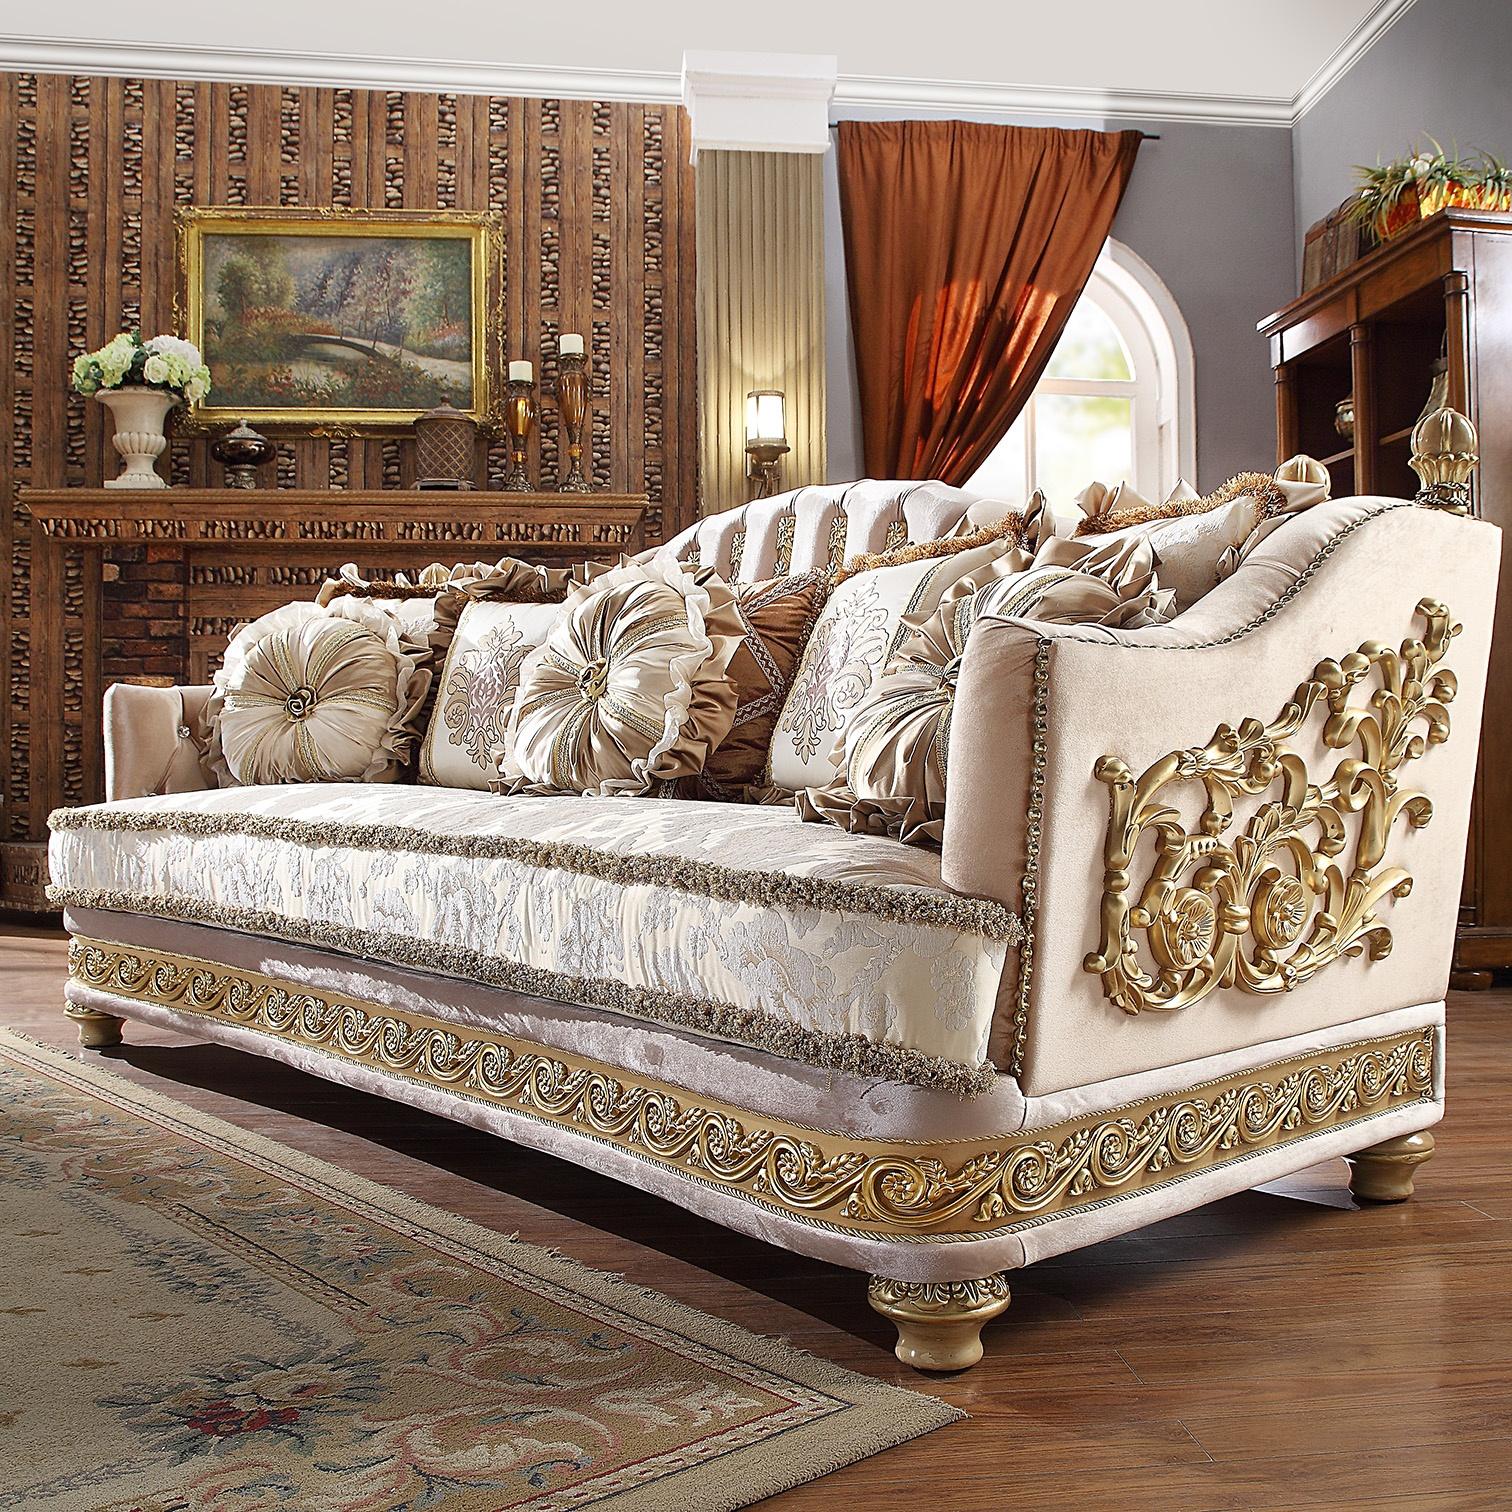 

    
Homey Design Furniture HD-814 HD-C8024 Sofa Loveseat Chair and Coffee Table Gold/Tan/Cherry HD-814-Set-4
